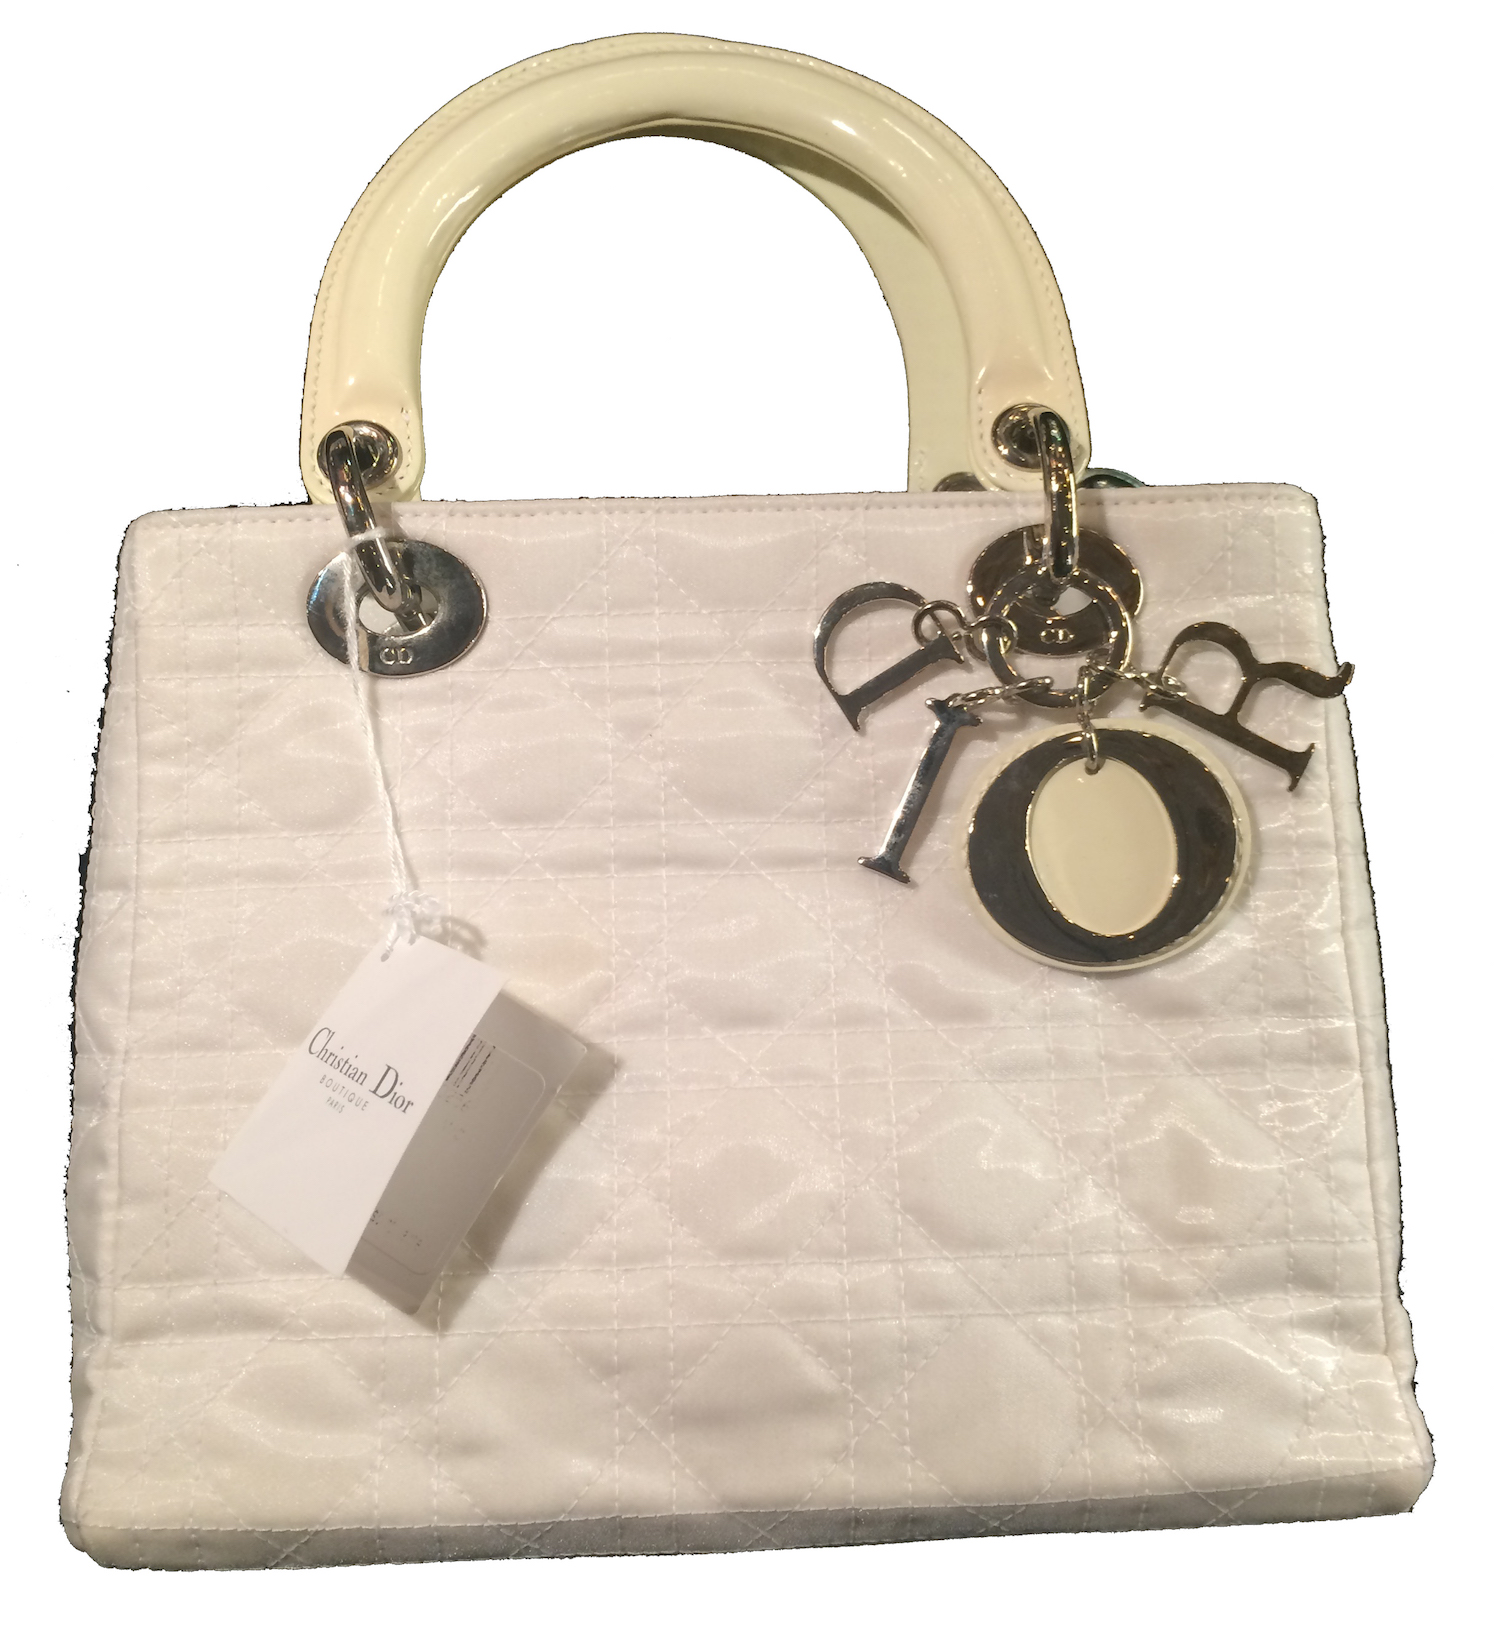 Vintage Authentic Christian Dior Lady Dior Handbag